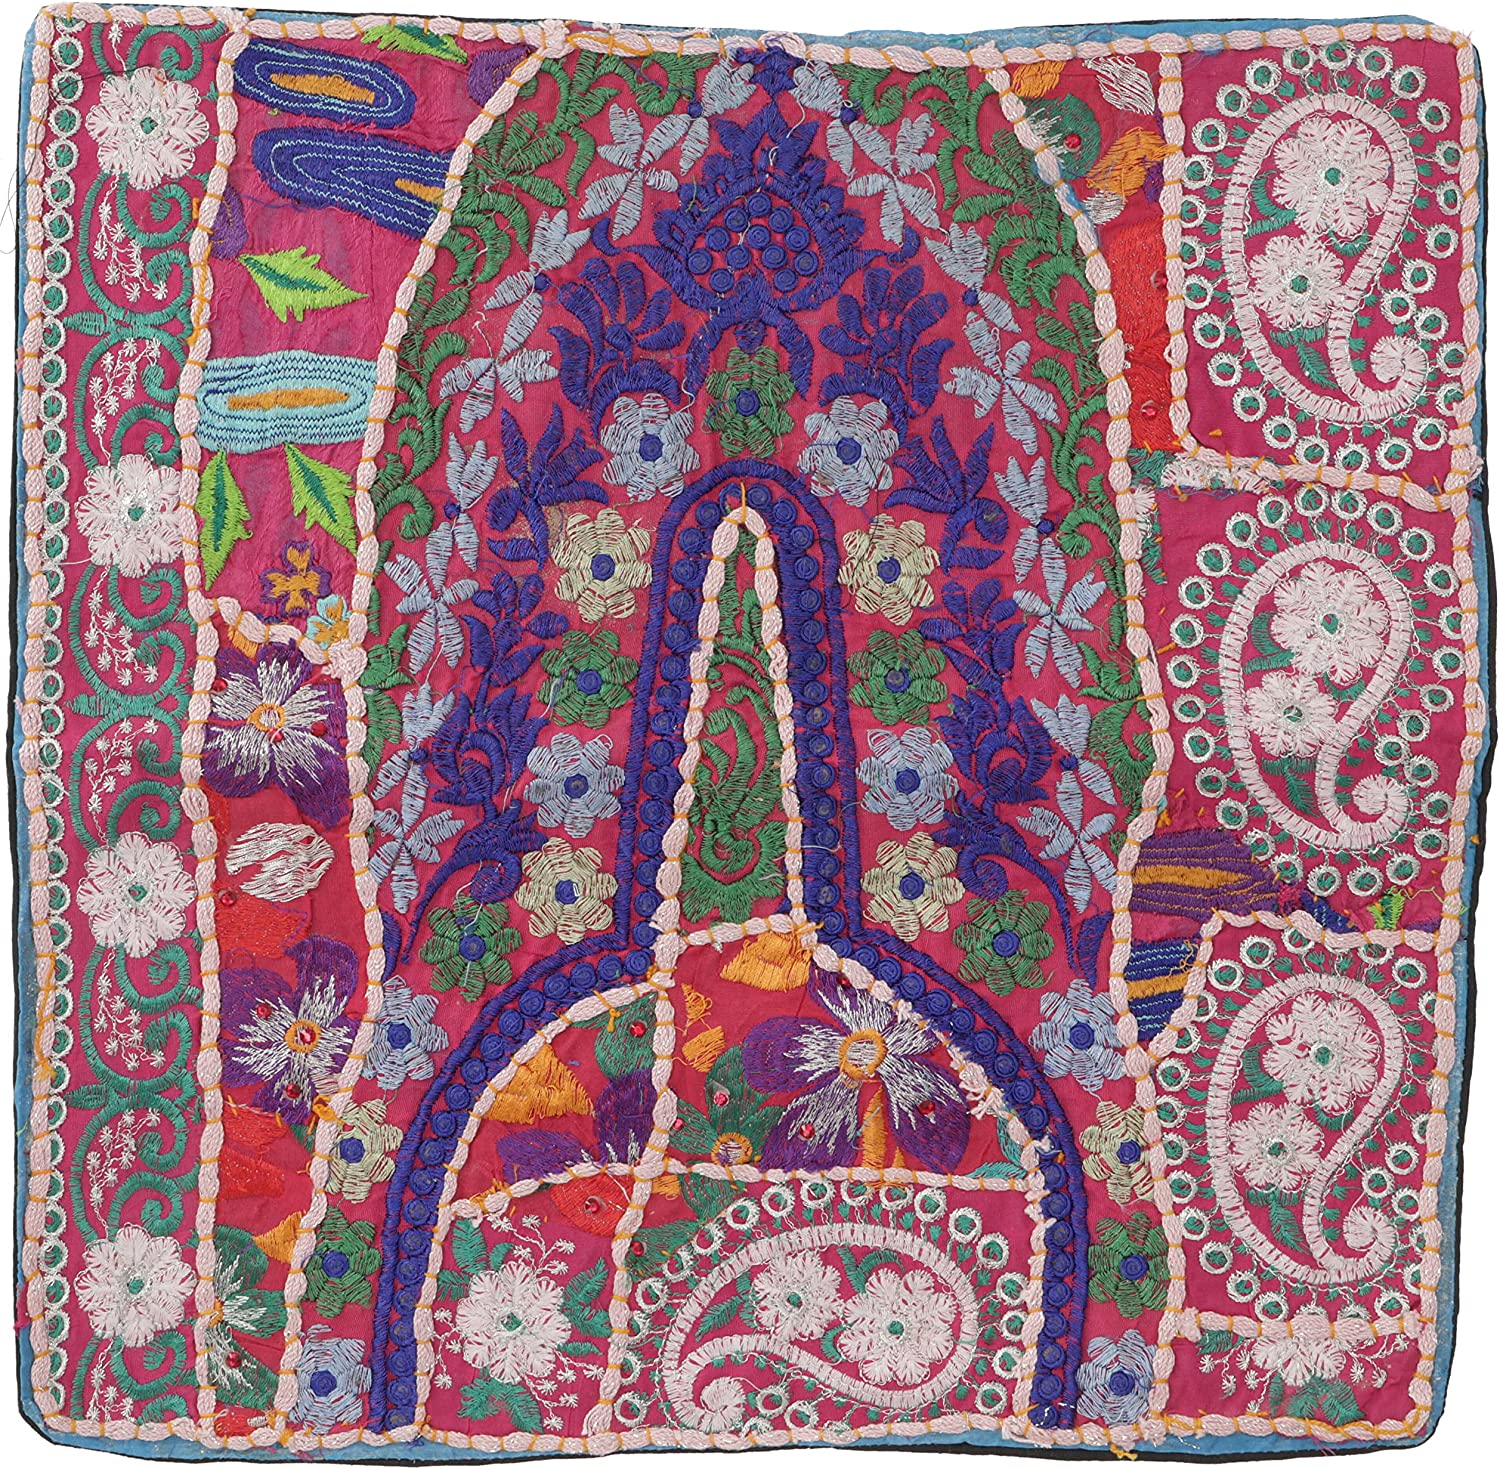 Guru-Shop GURU SHOP Patchwork cushion cover, decorative cushion cover made of Rajasthan, single piece, pattern 6, multi-coloured, cotton, 40 x 40 cm, decorative cushion, sofa cushion